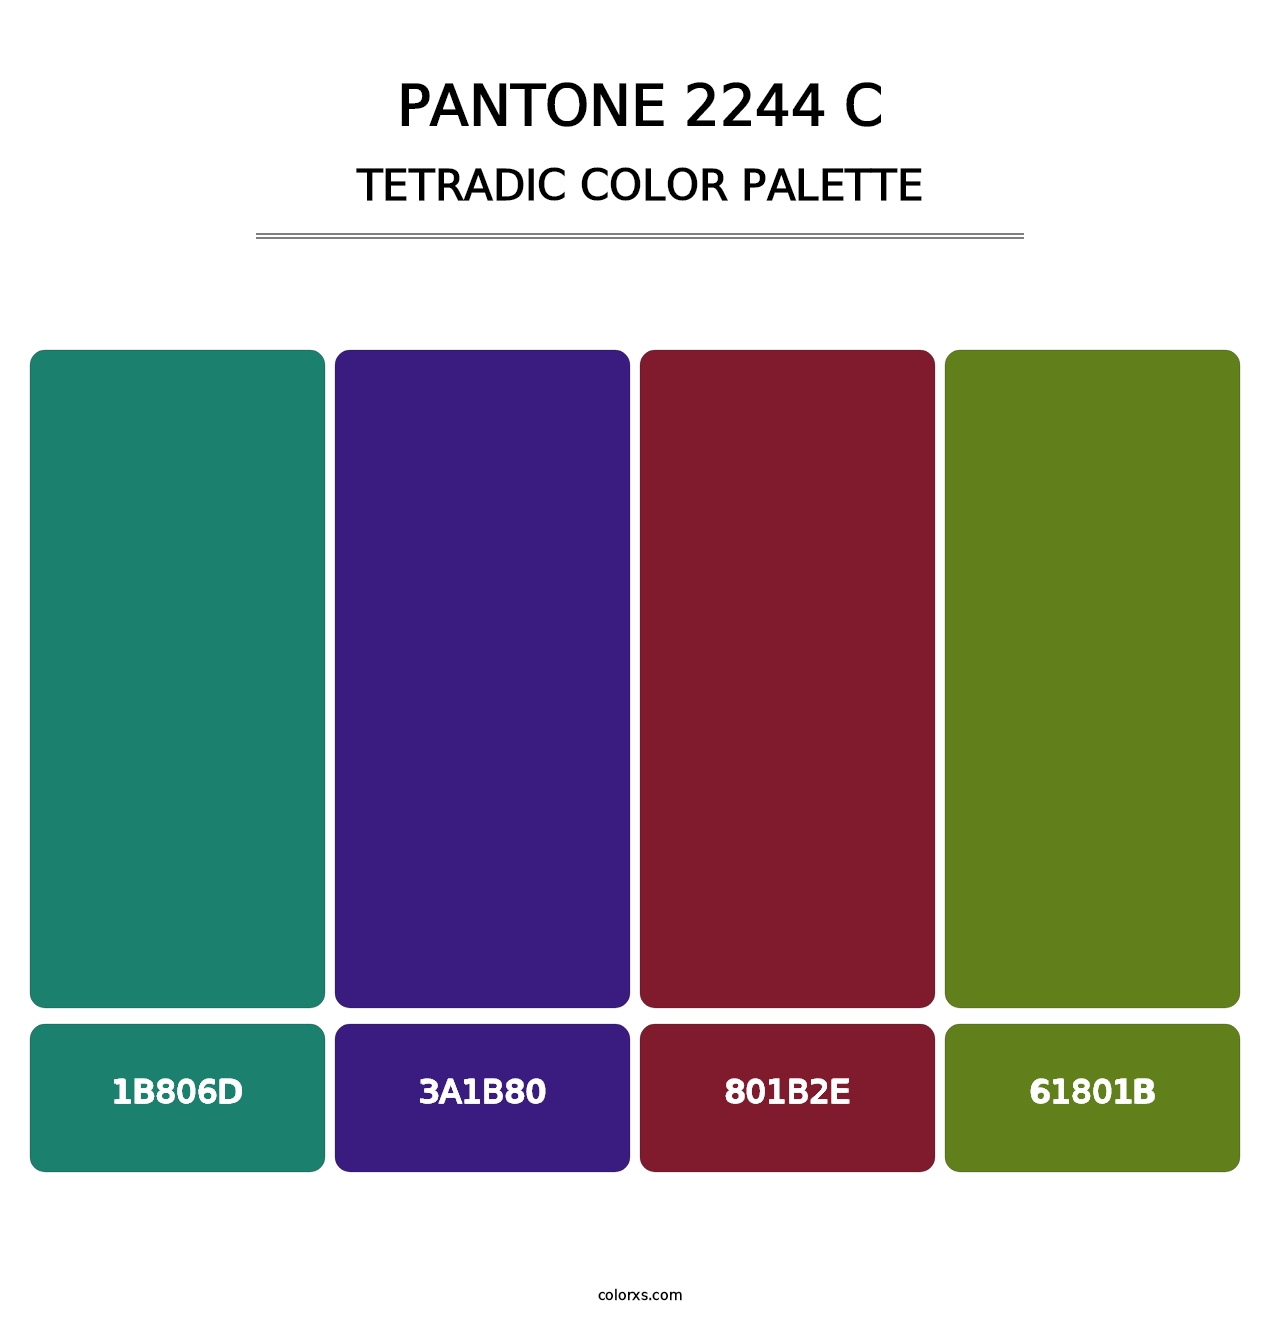 PANTONE 2244 C - Tetradic Color Palette